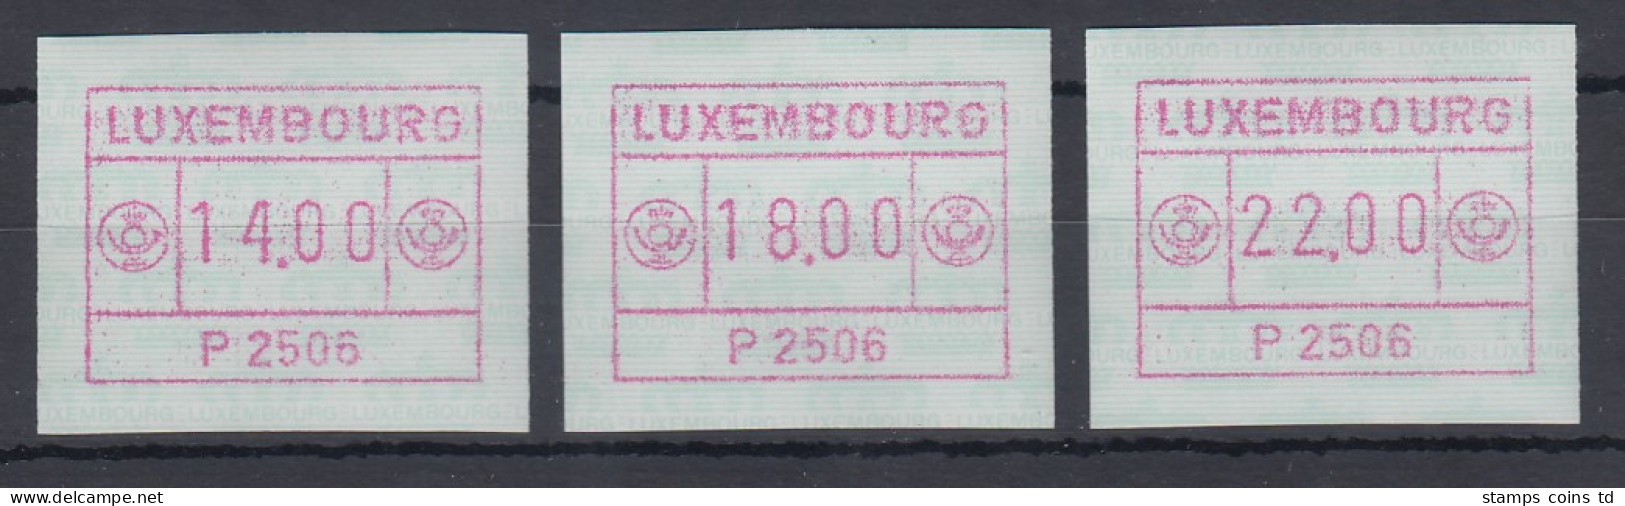 Luxemburg ATM P2506 Tastensatz 14-18-22 **   - Automatenmarken